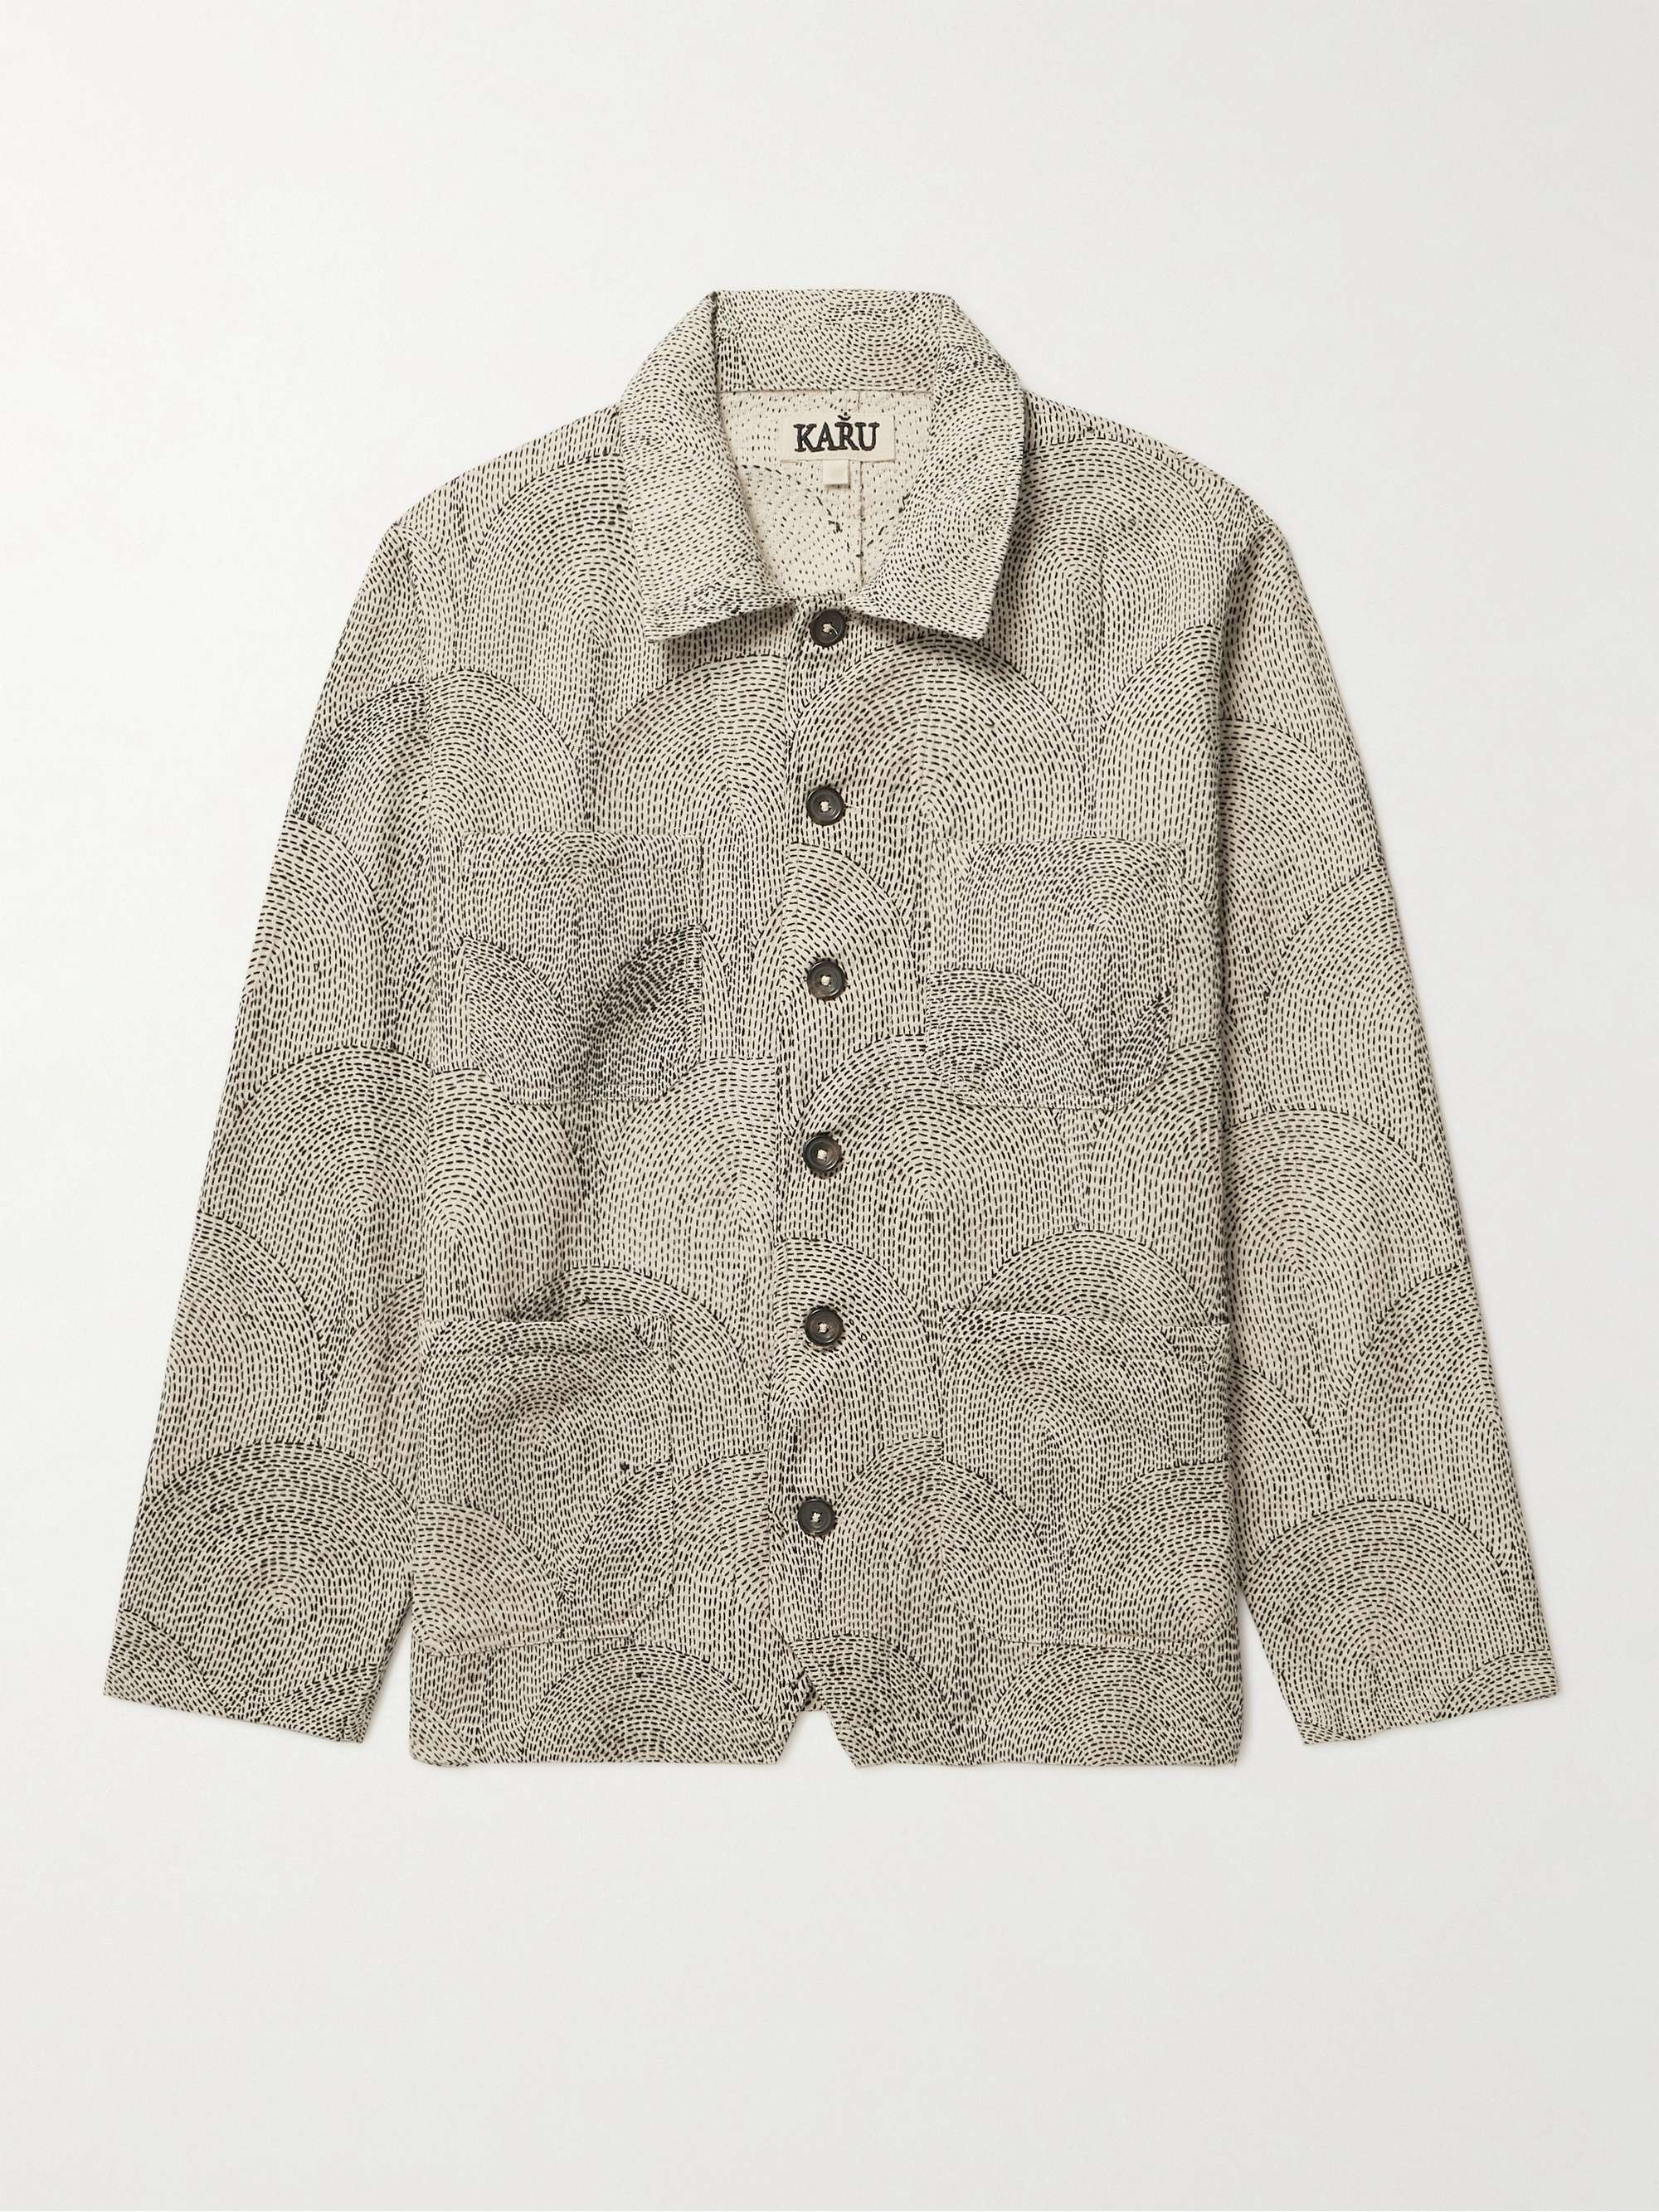 KARU RESEARCH Embroidered Cotton Chore Jacket for Men | MR PORTER